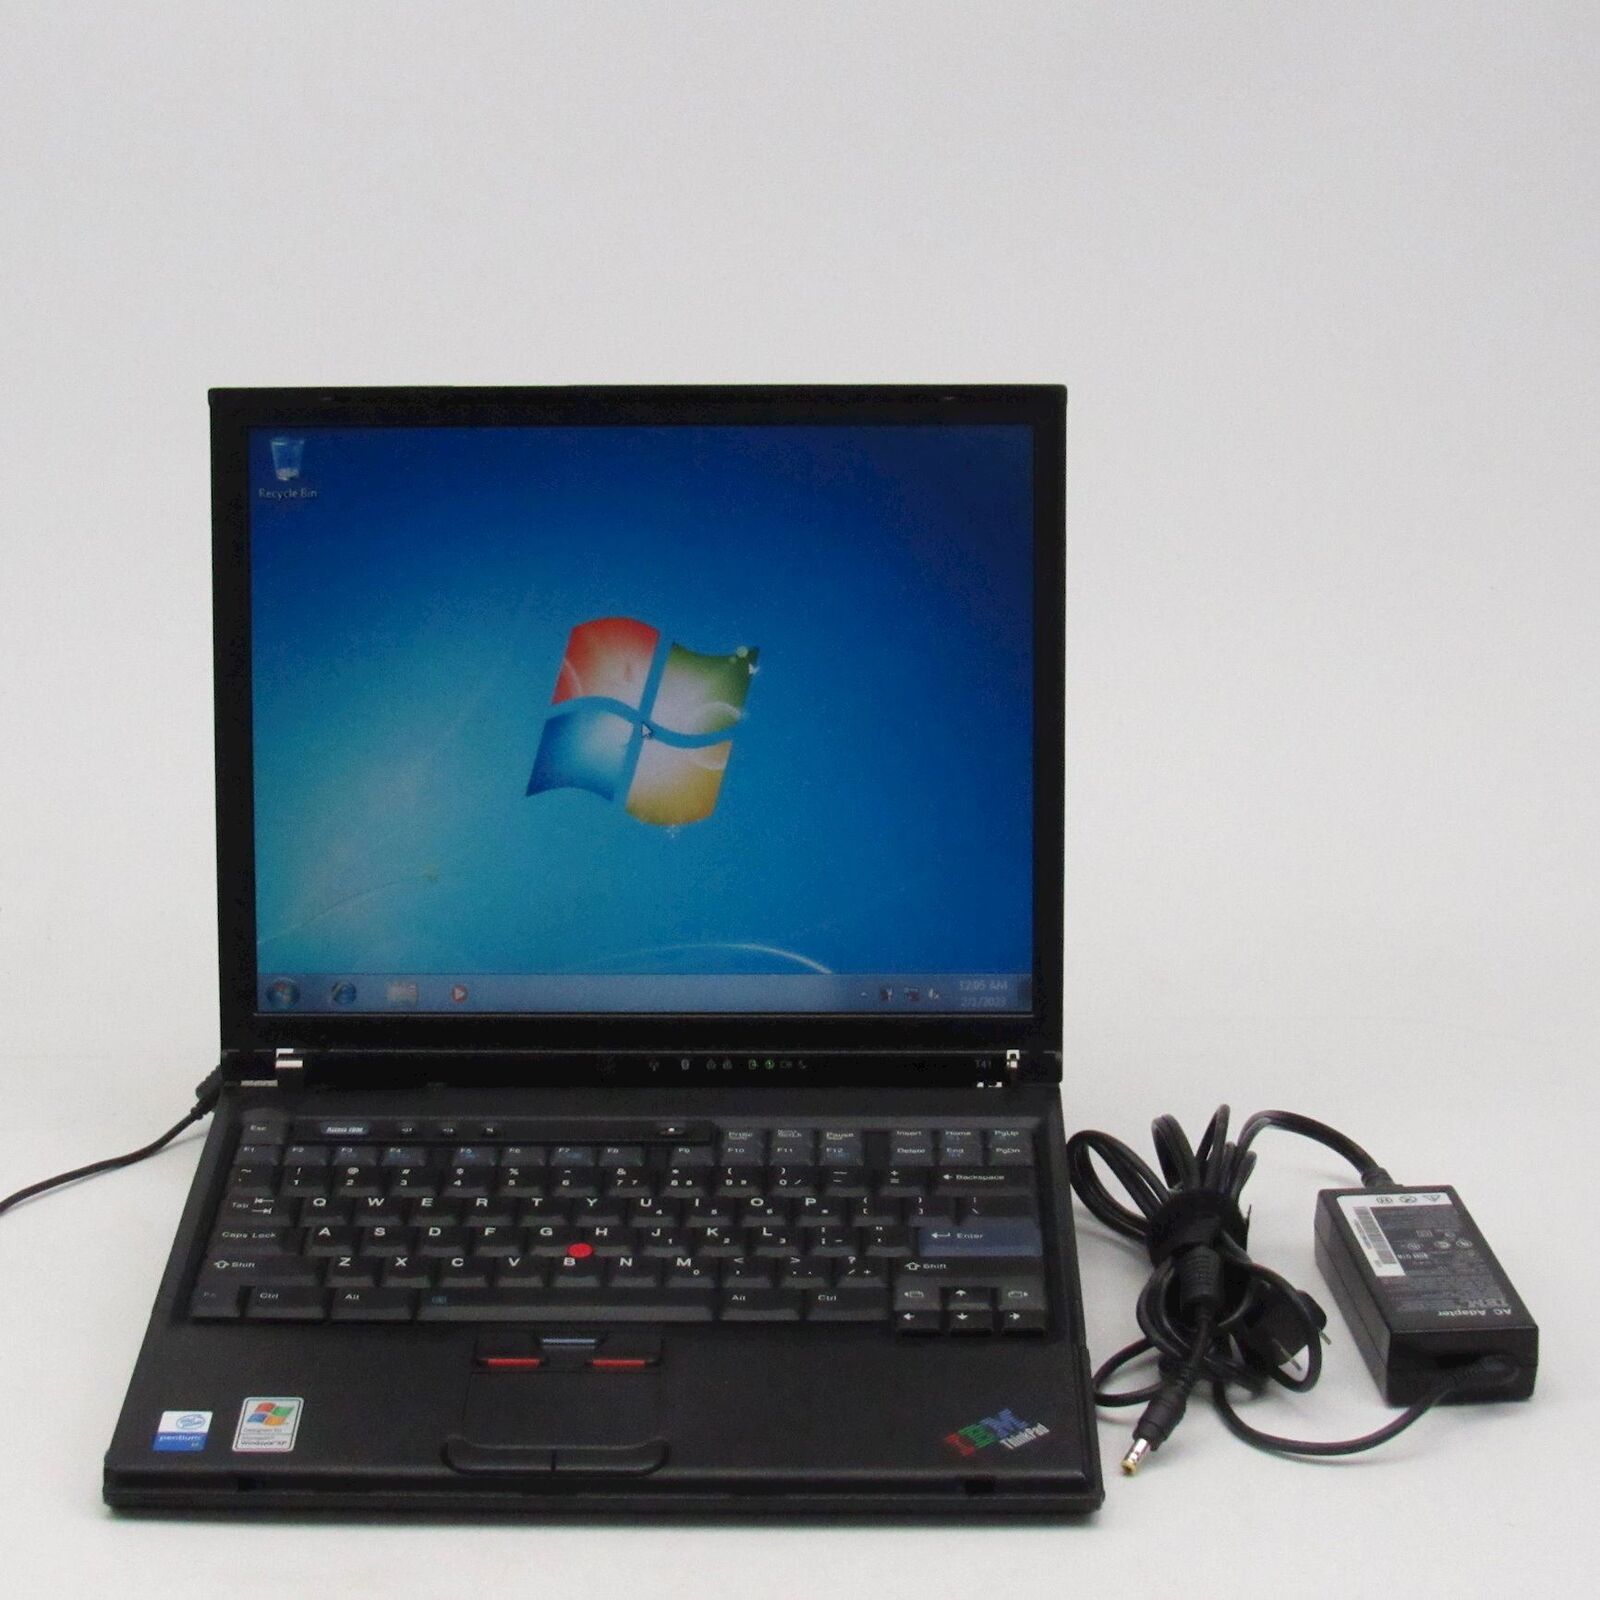 IBM ThinkPad T41 Intel Pentium M 1.6GHz 1.5GB RAM 80GB HDD 14.1